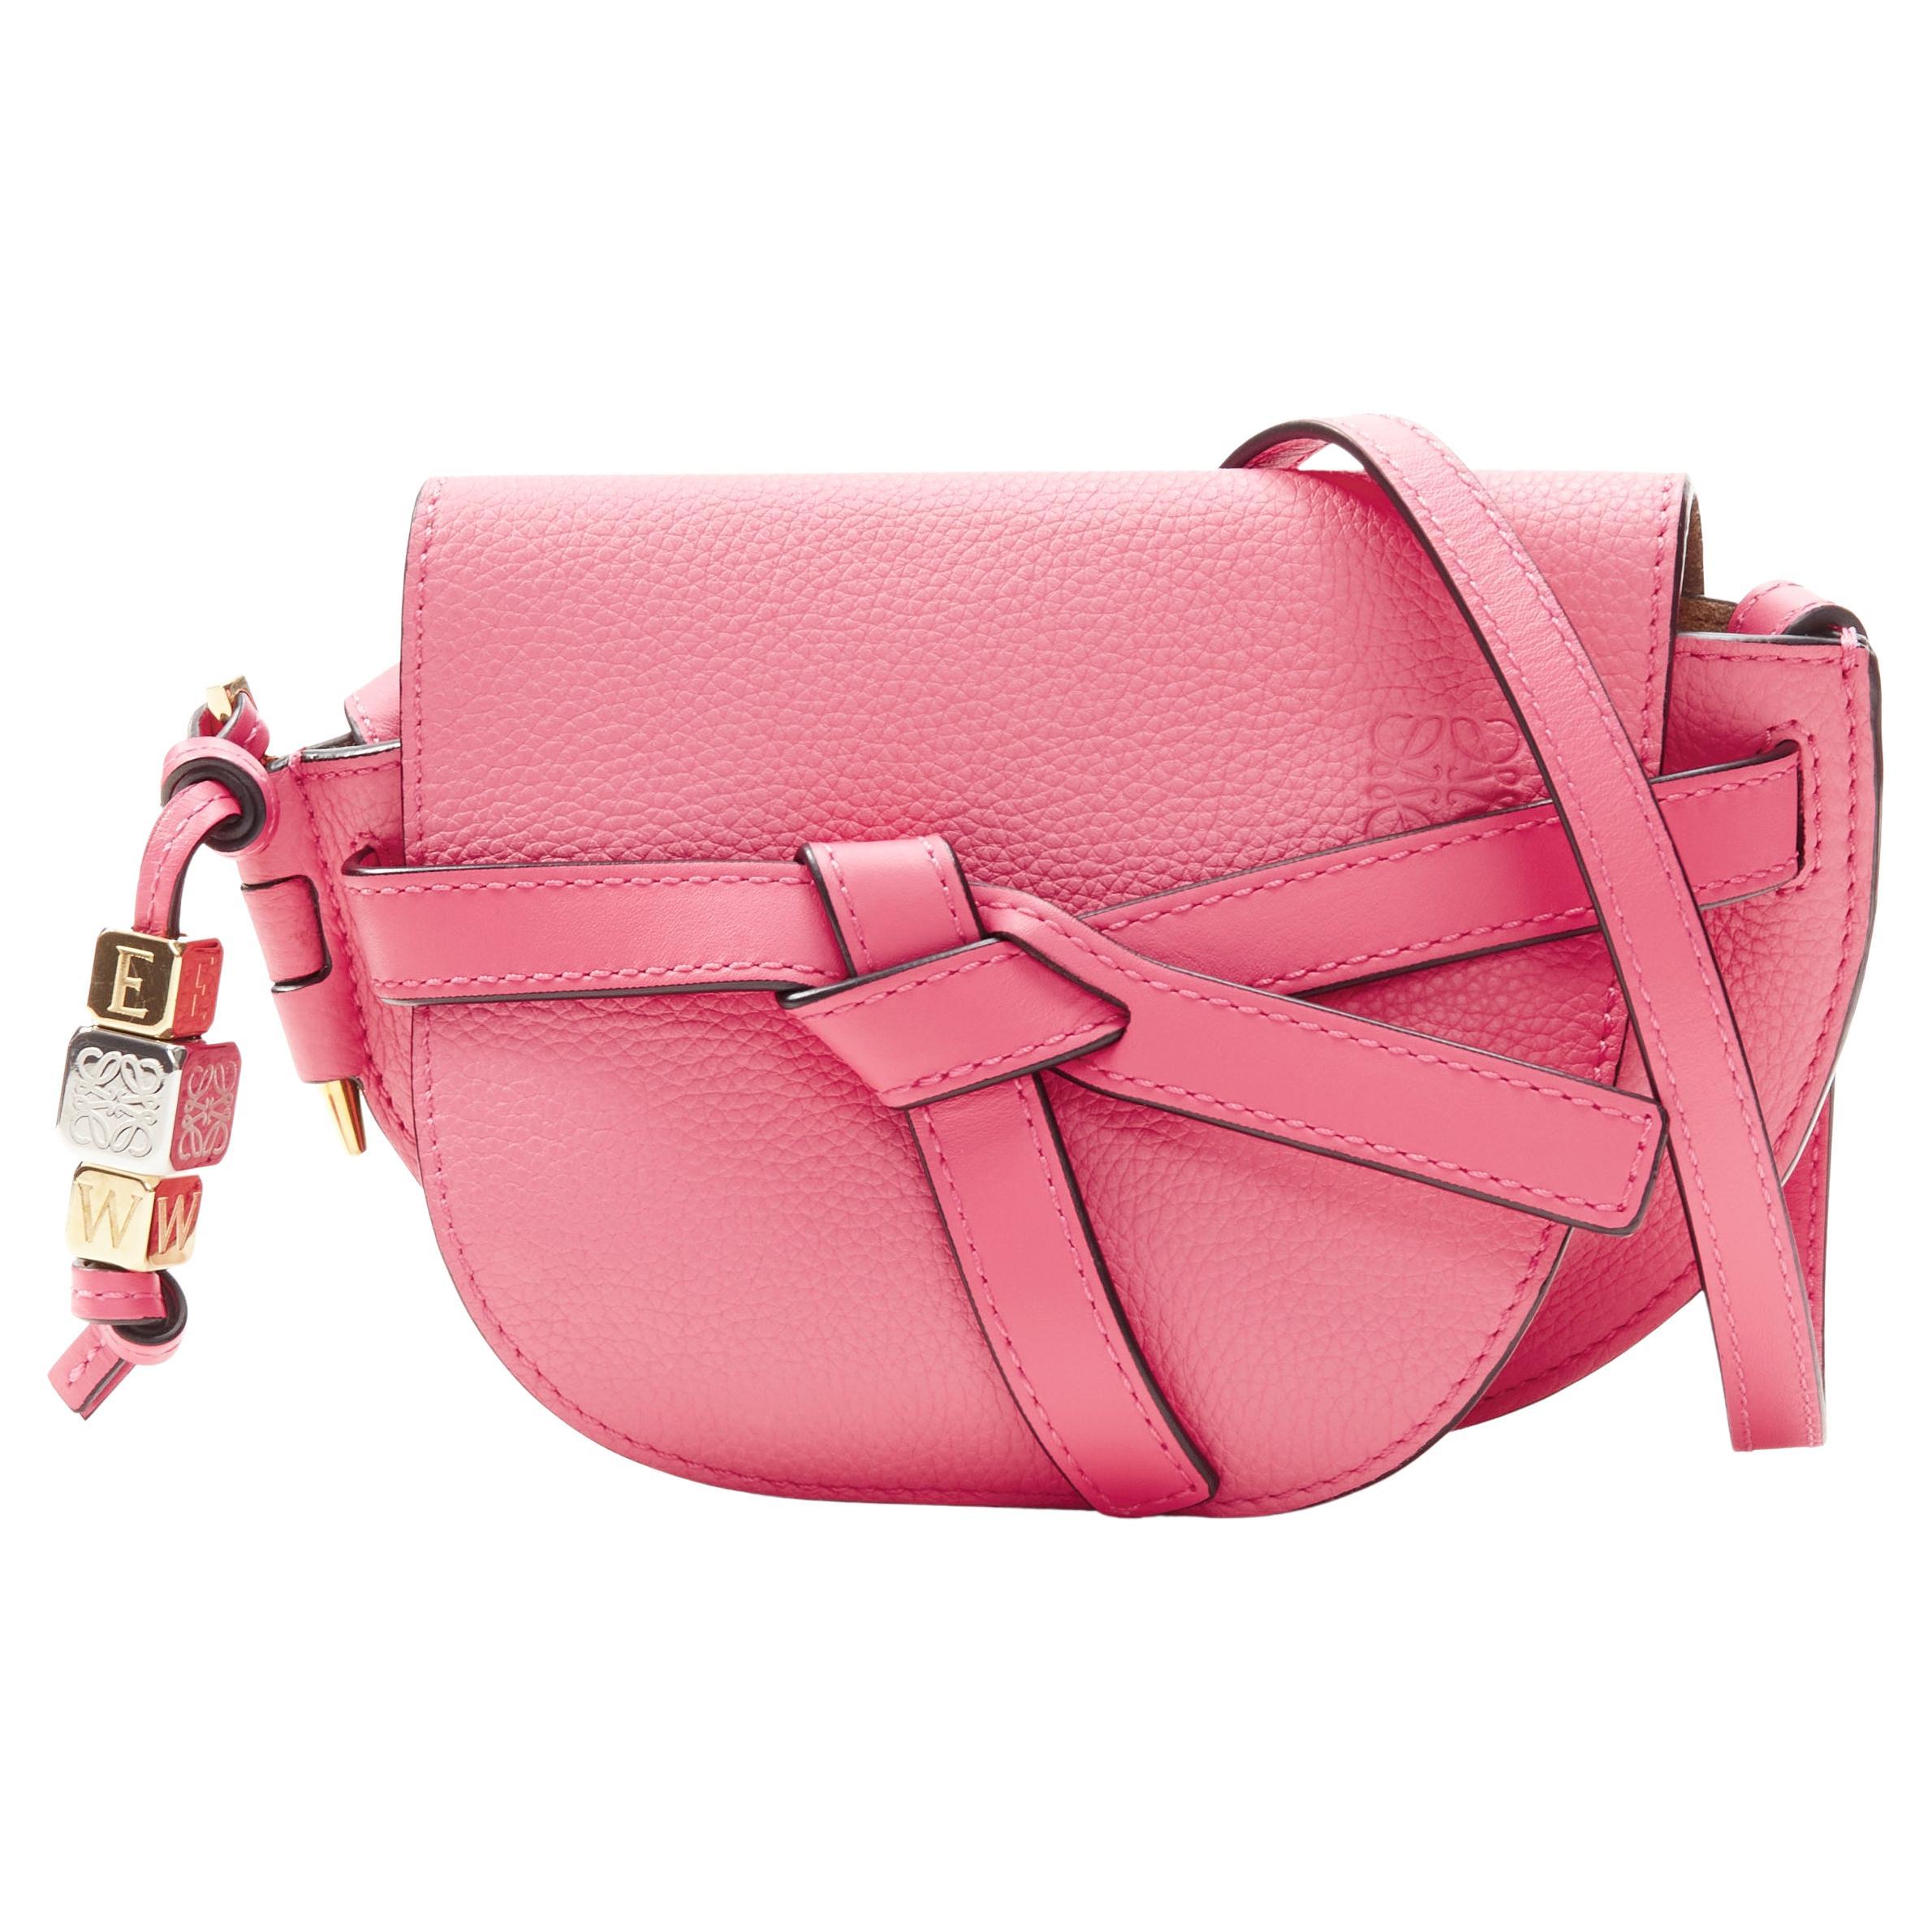 LOEWE Mini Gate light pink knot strap half moon crossbody bag